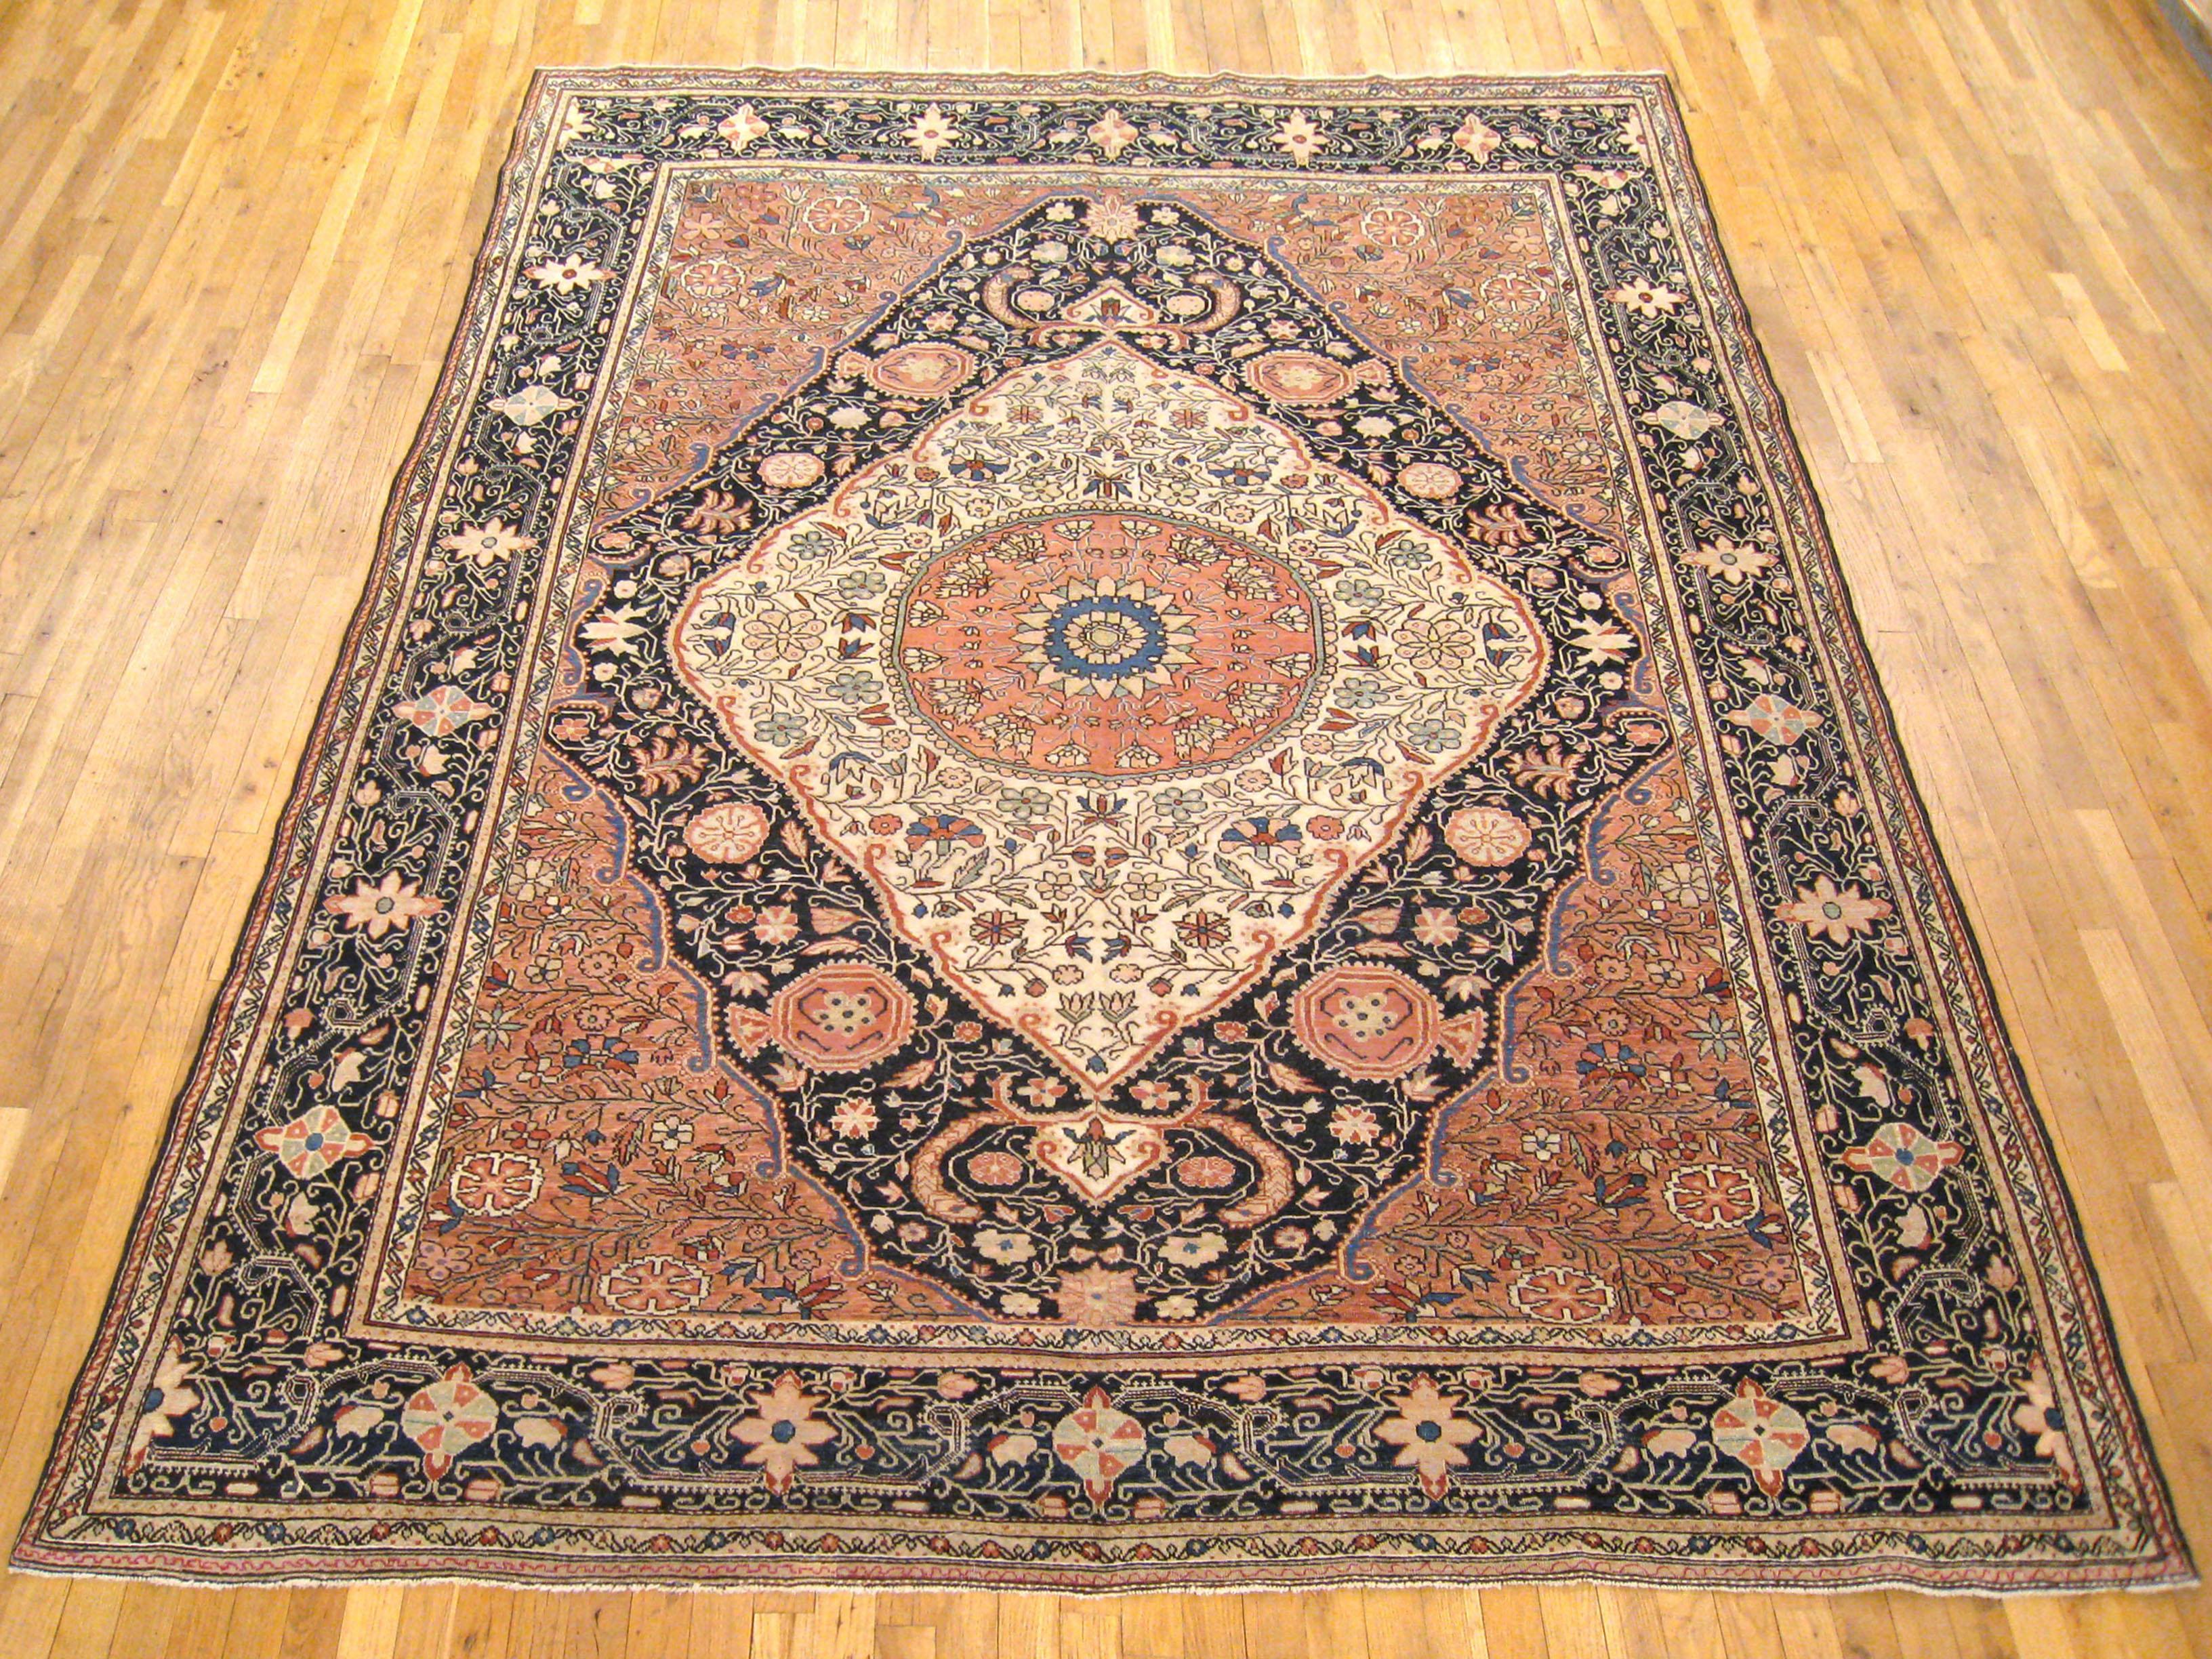 Antique Ferahan Sarouk Oriental rug, circa 1900, room size.

An antique Ferahan Sarouk oriental rug, size 9'9